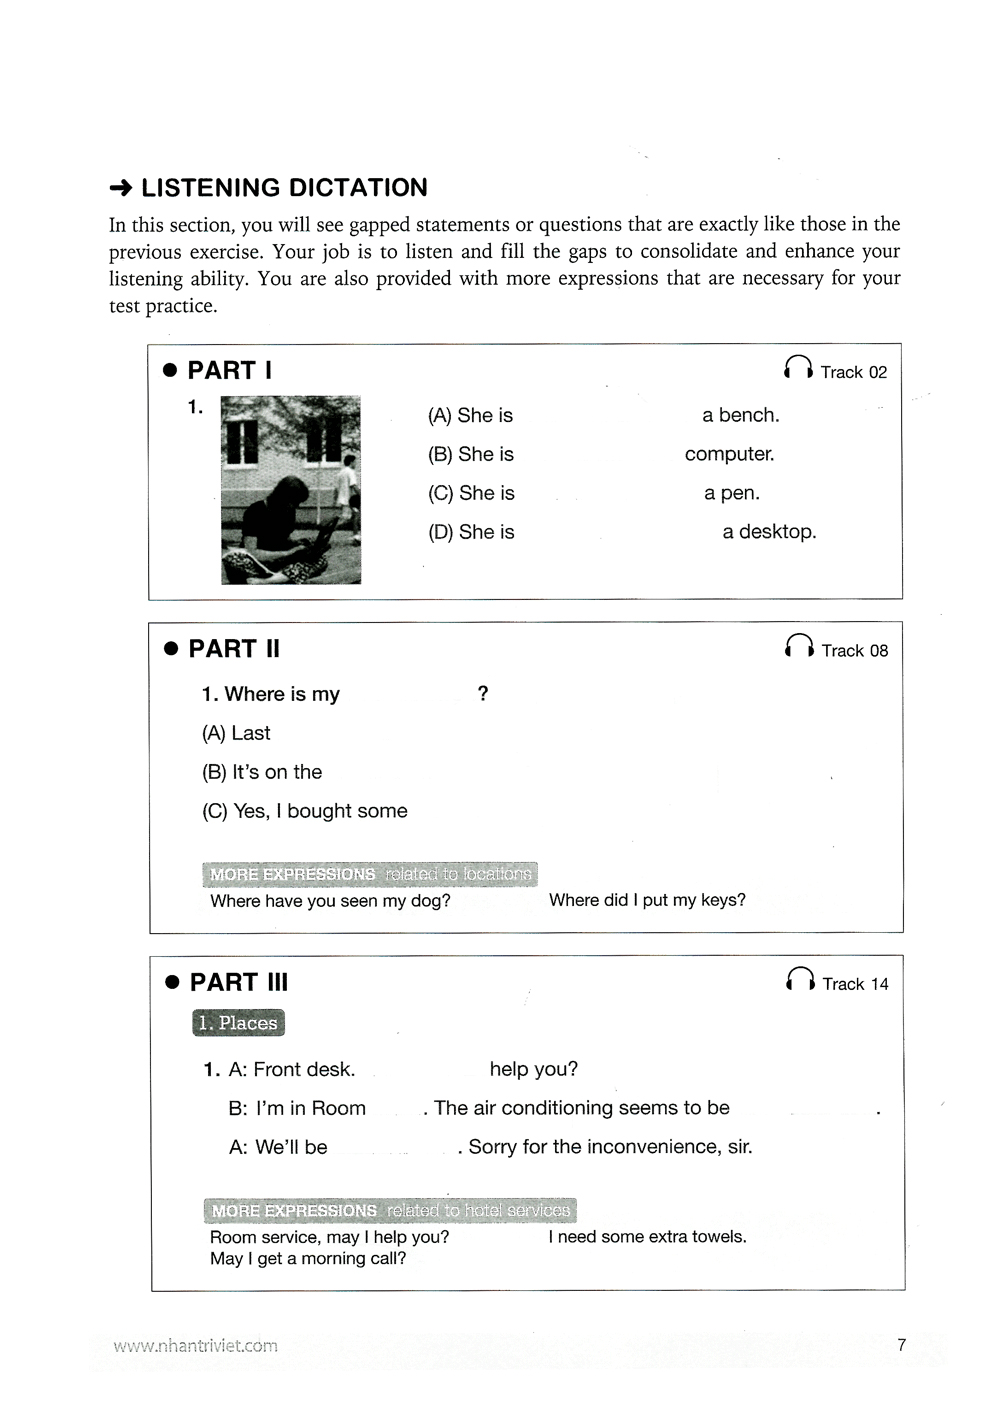 Toeic Smart Red Book Listening Kèm CD PDF